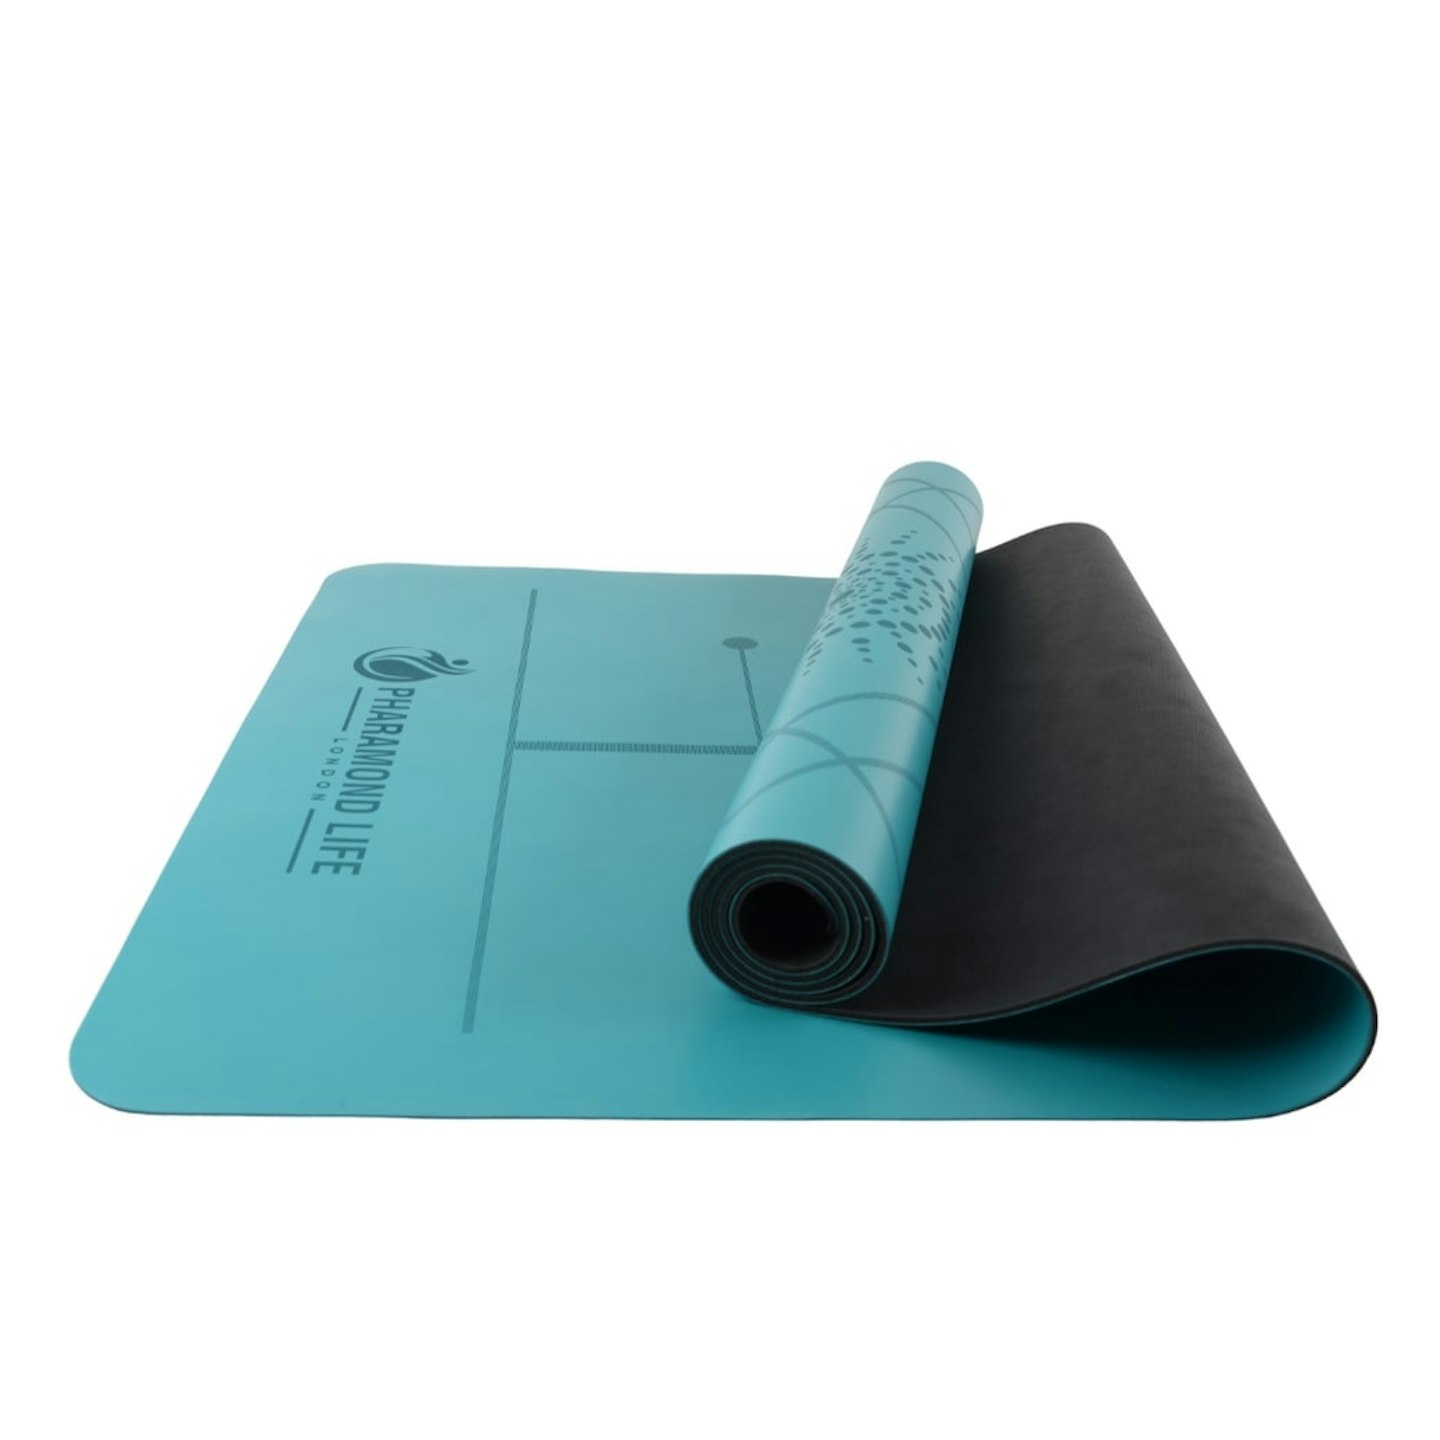 Terragrip, Yoga Mat With Asanaalign Body Alignment System, £69.99